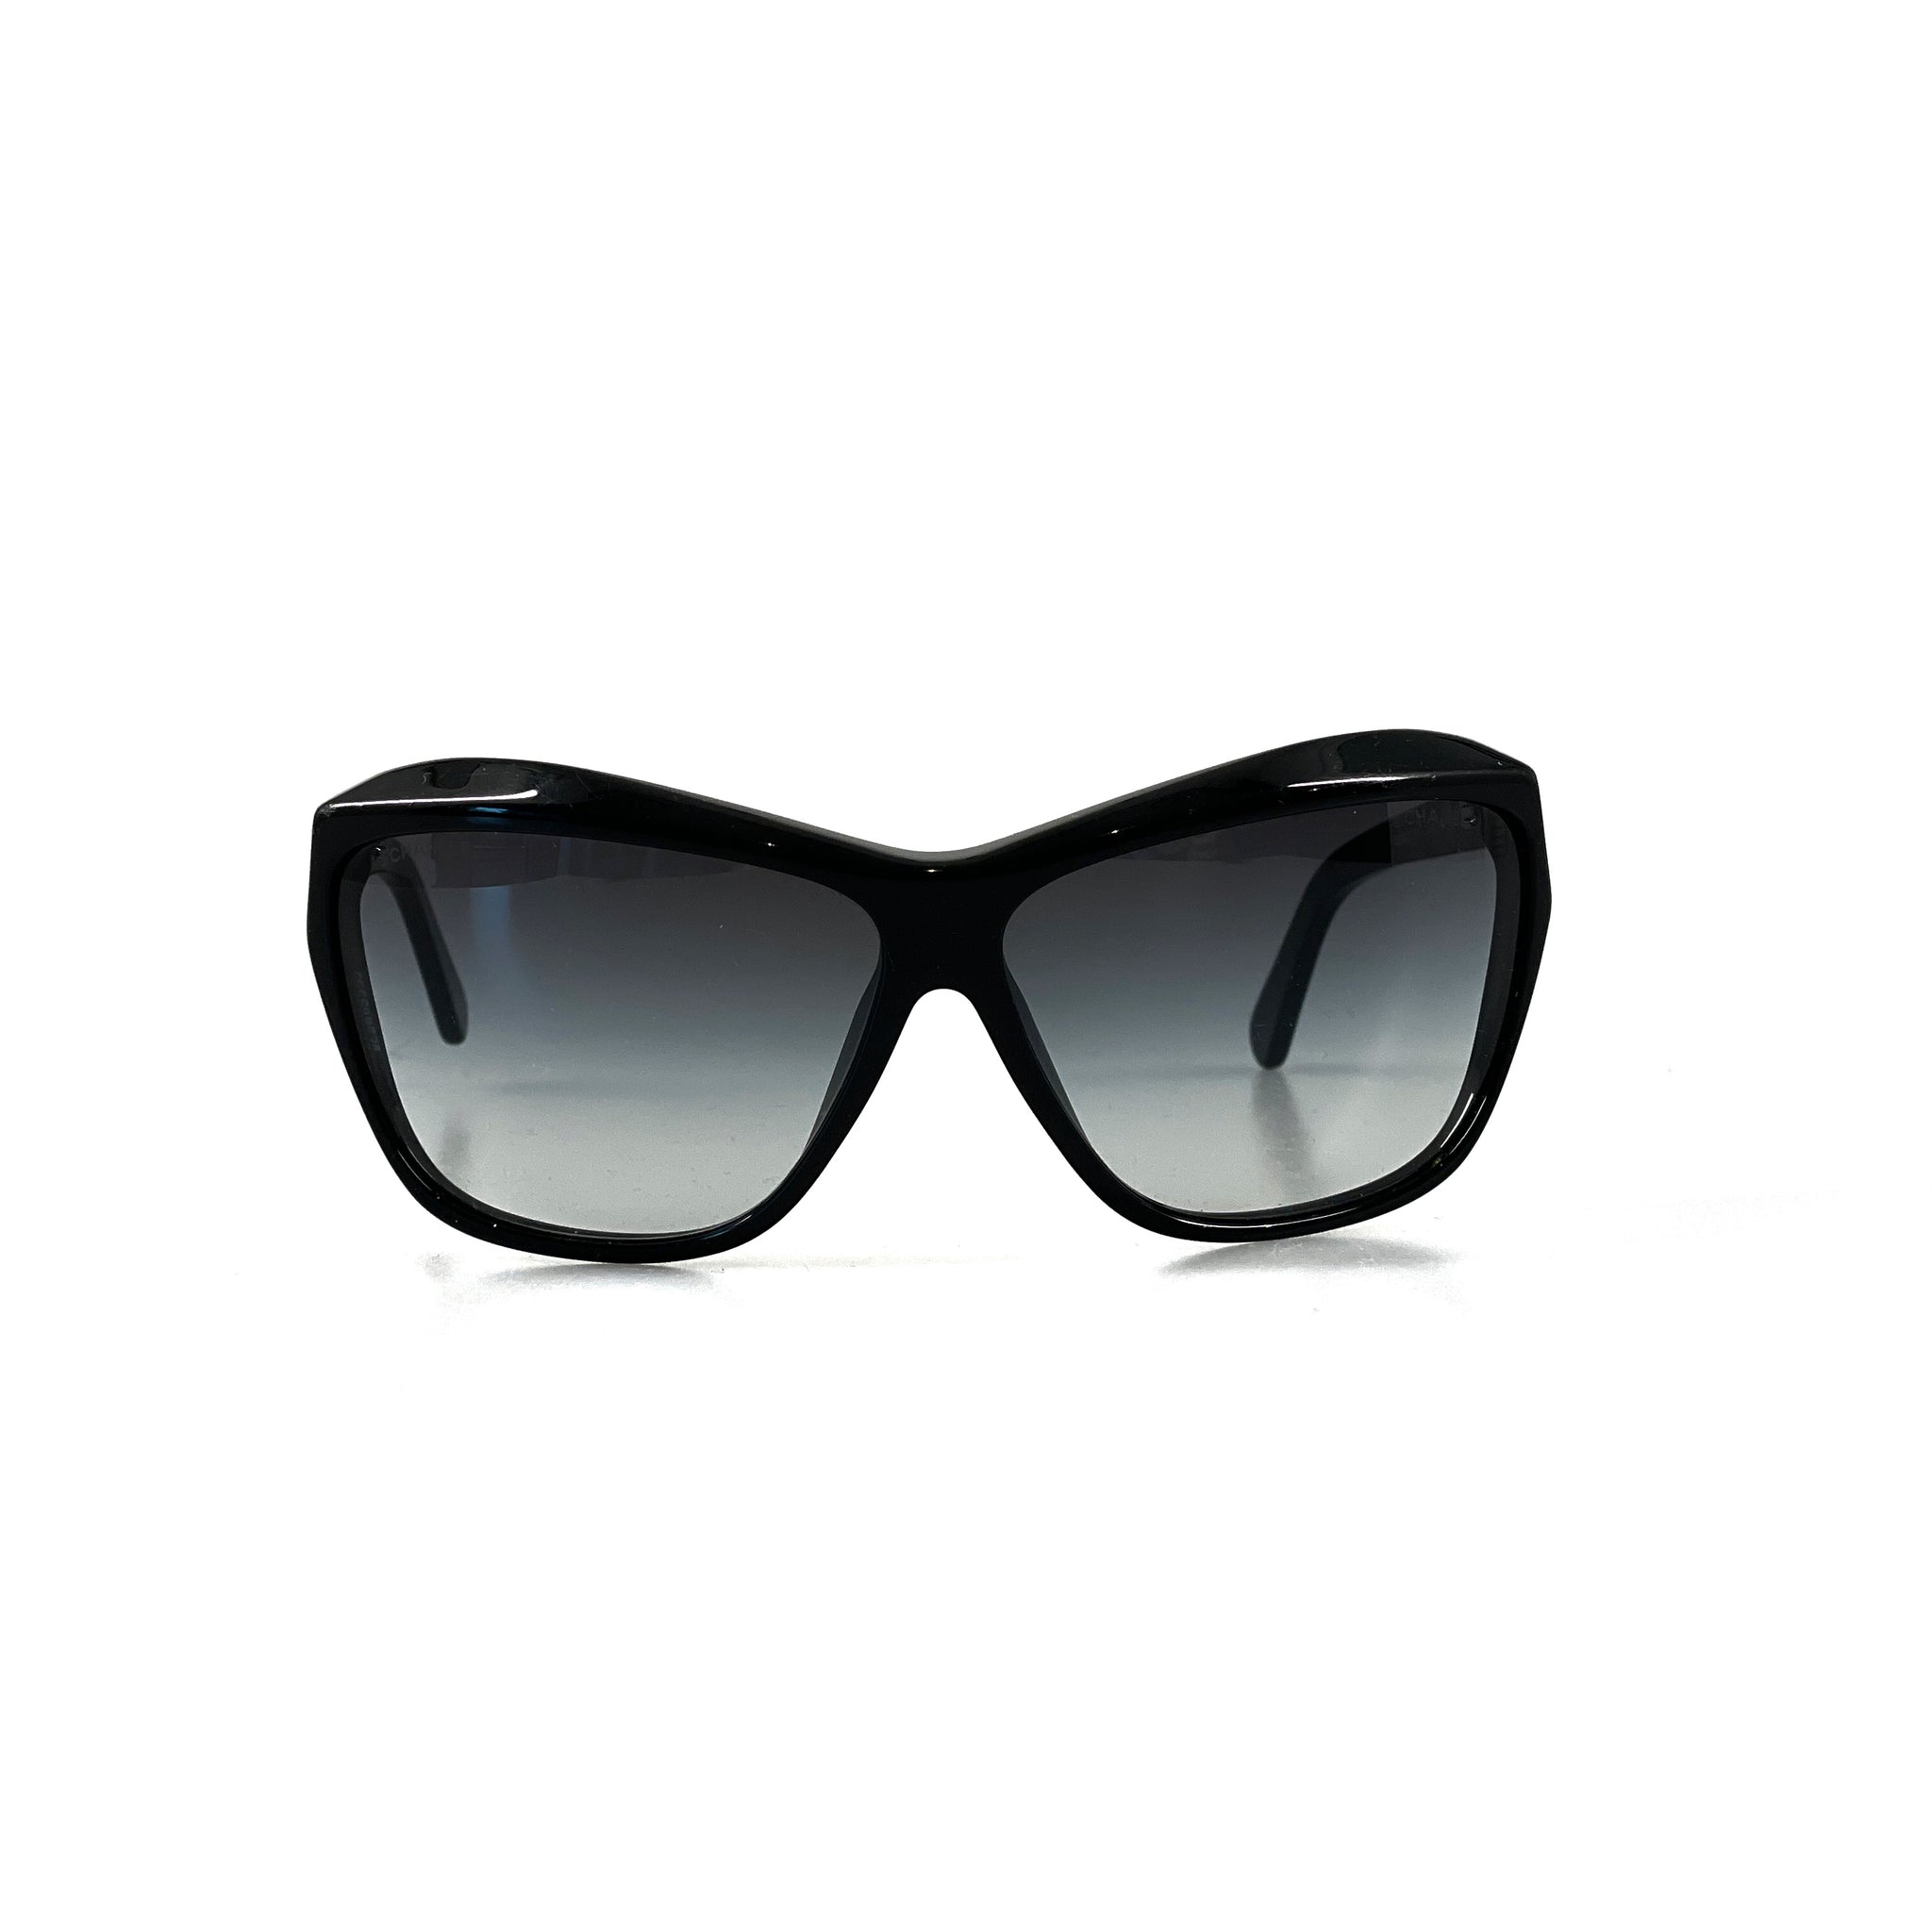 Chanel solglasögon SV8844